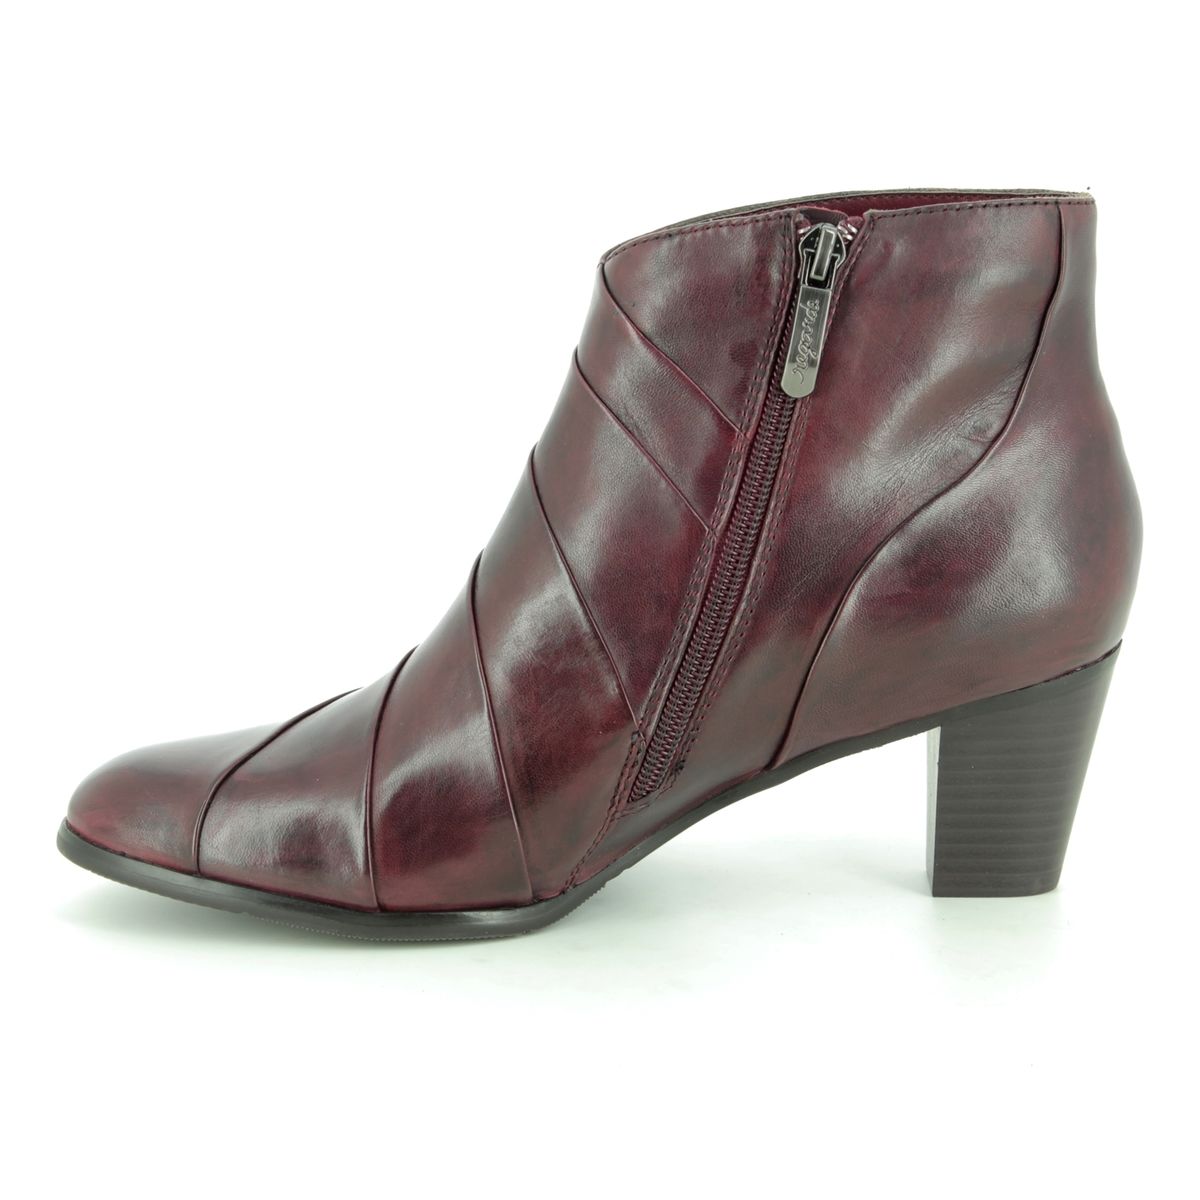 Regarde le Ciel Sonia 38 9008-81 Wine leather Ankle Boots